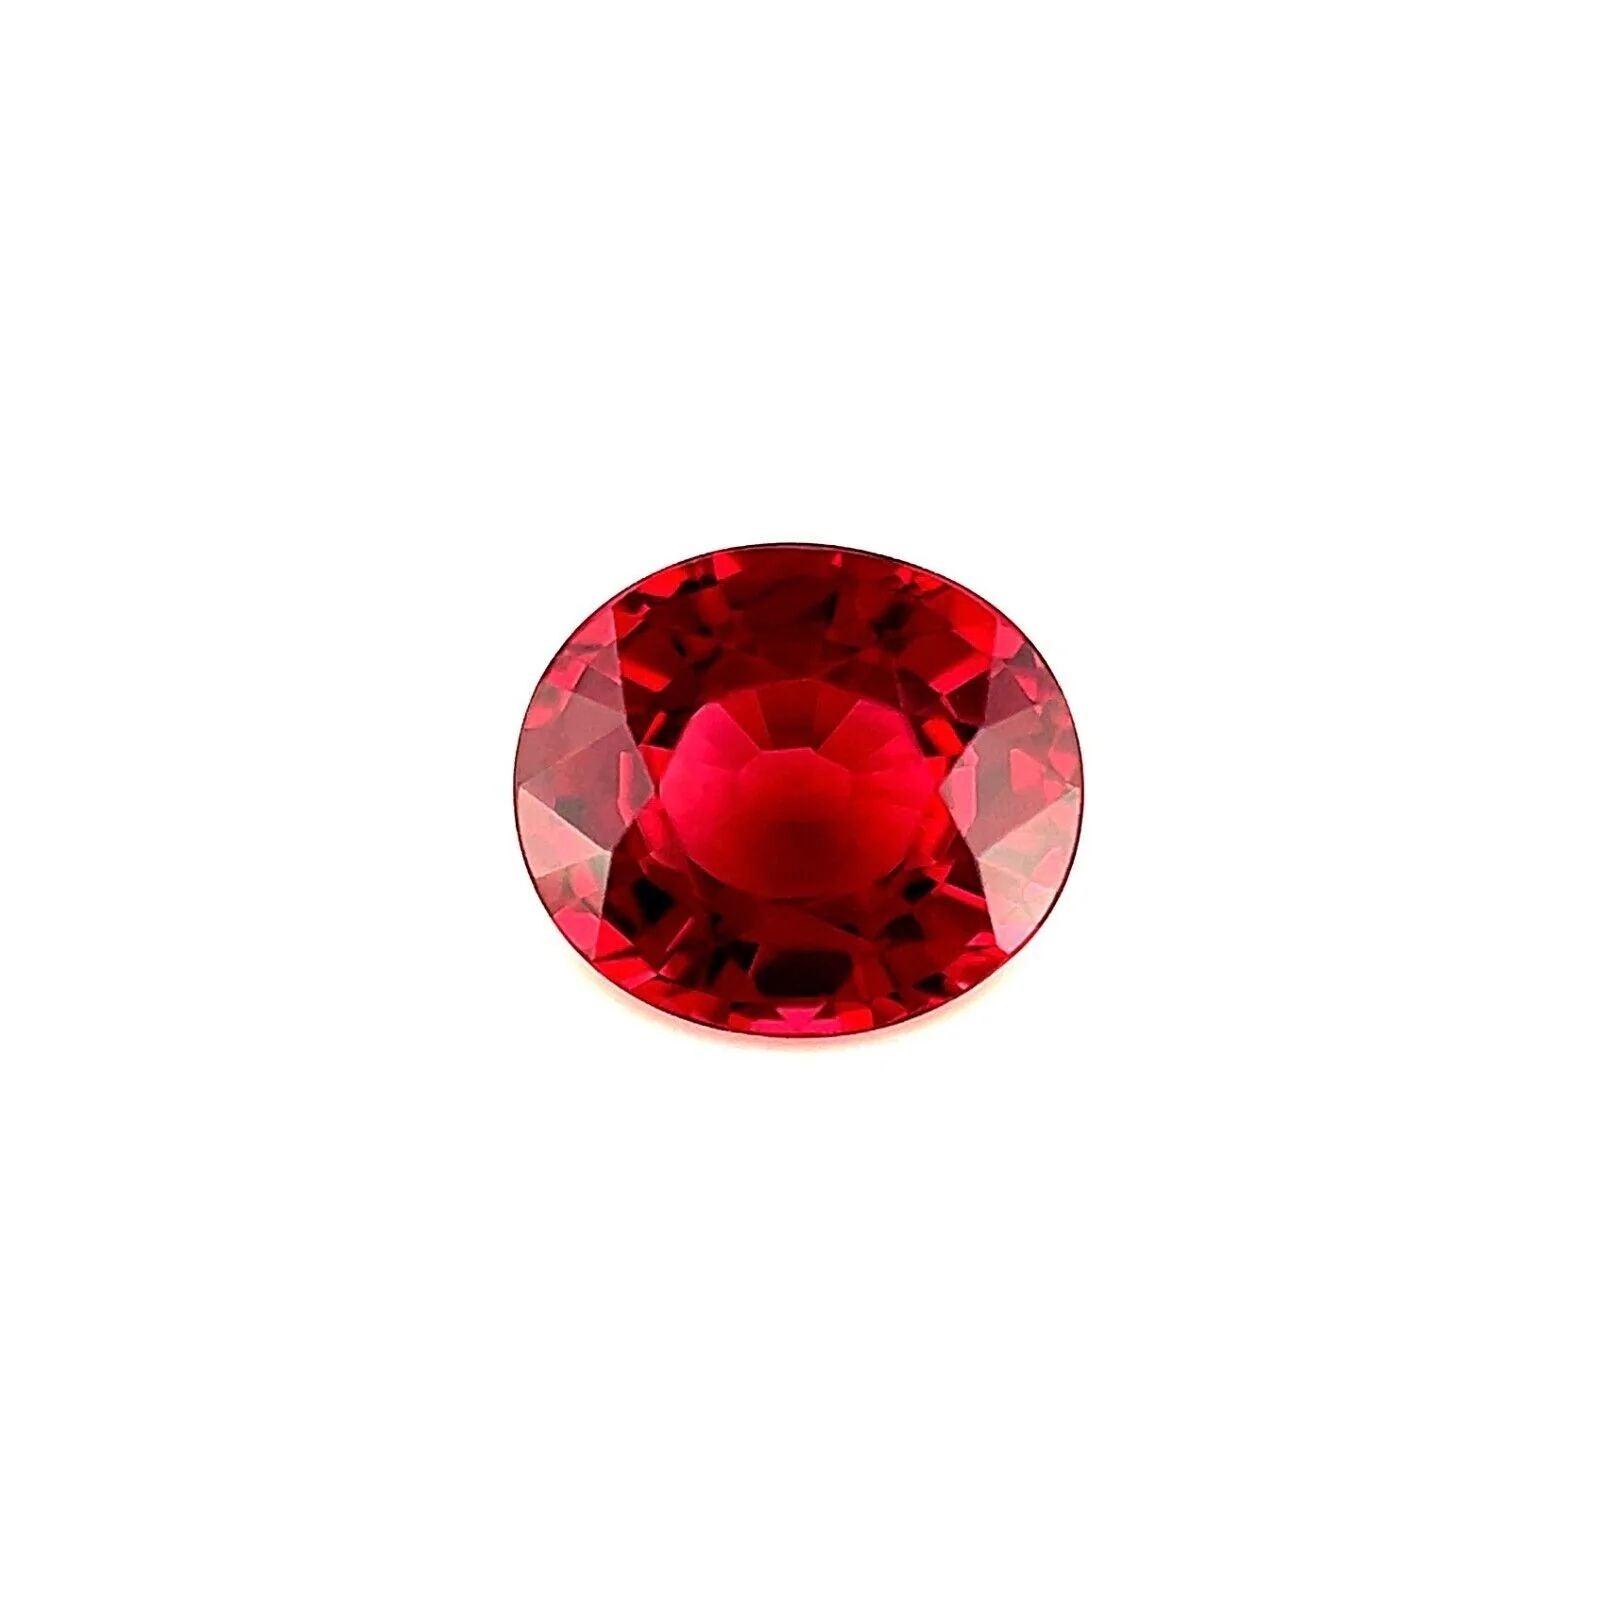 Fine pierre précieuse non sertie, grenat rhodolite rose vif taille ovale 1,51 carat, VVS